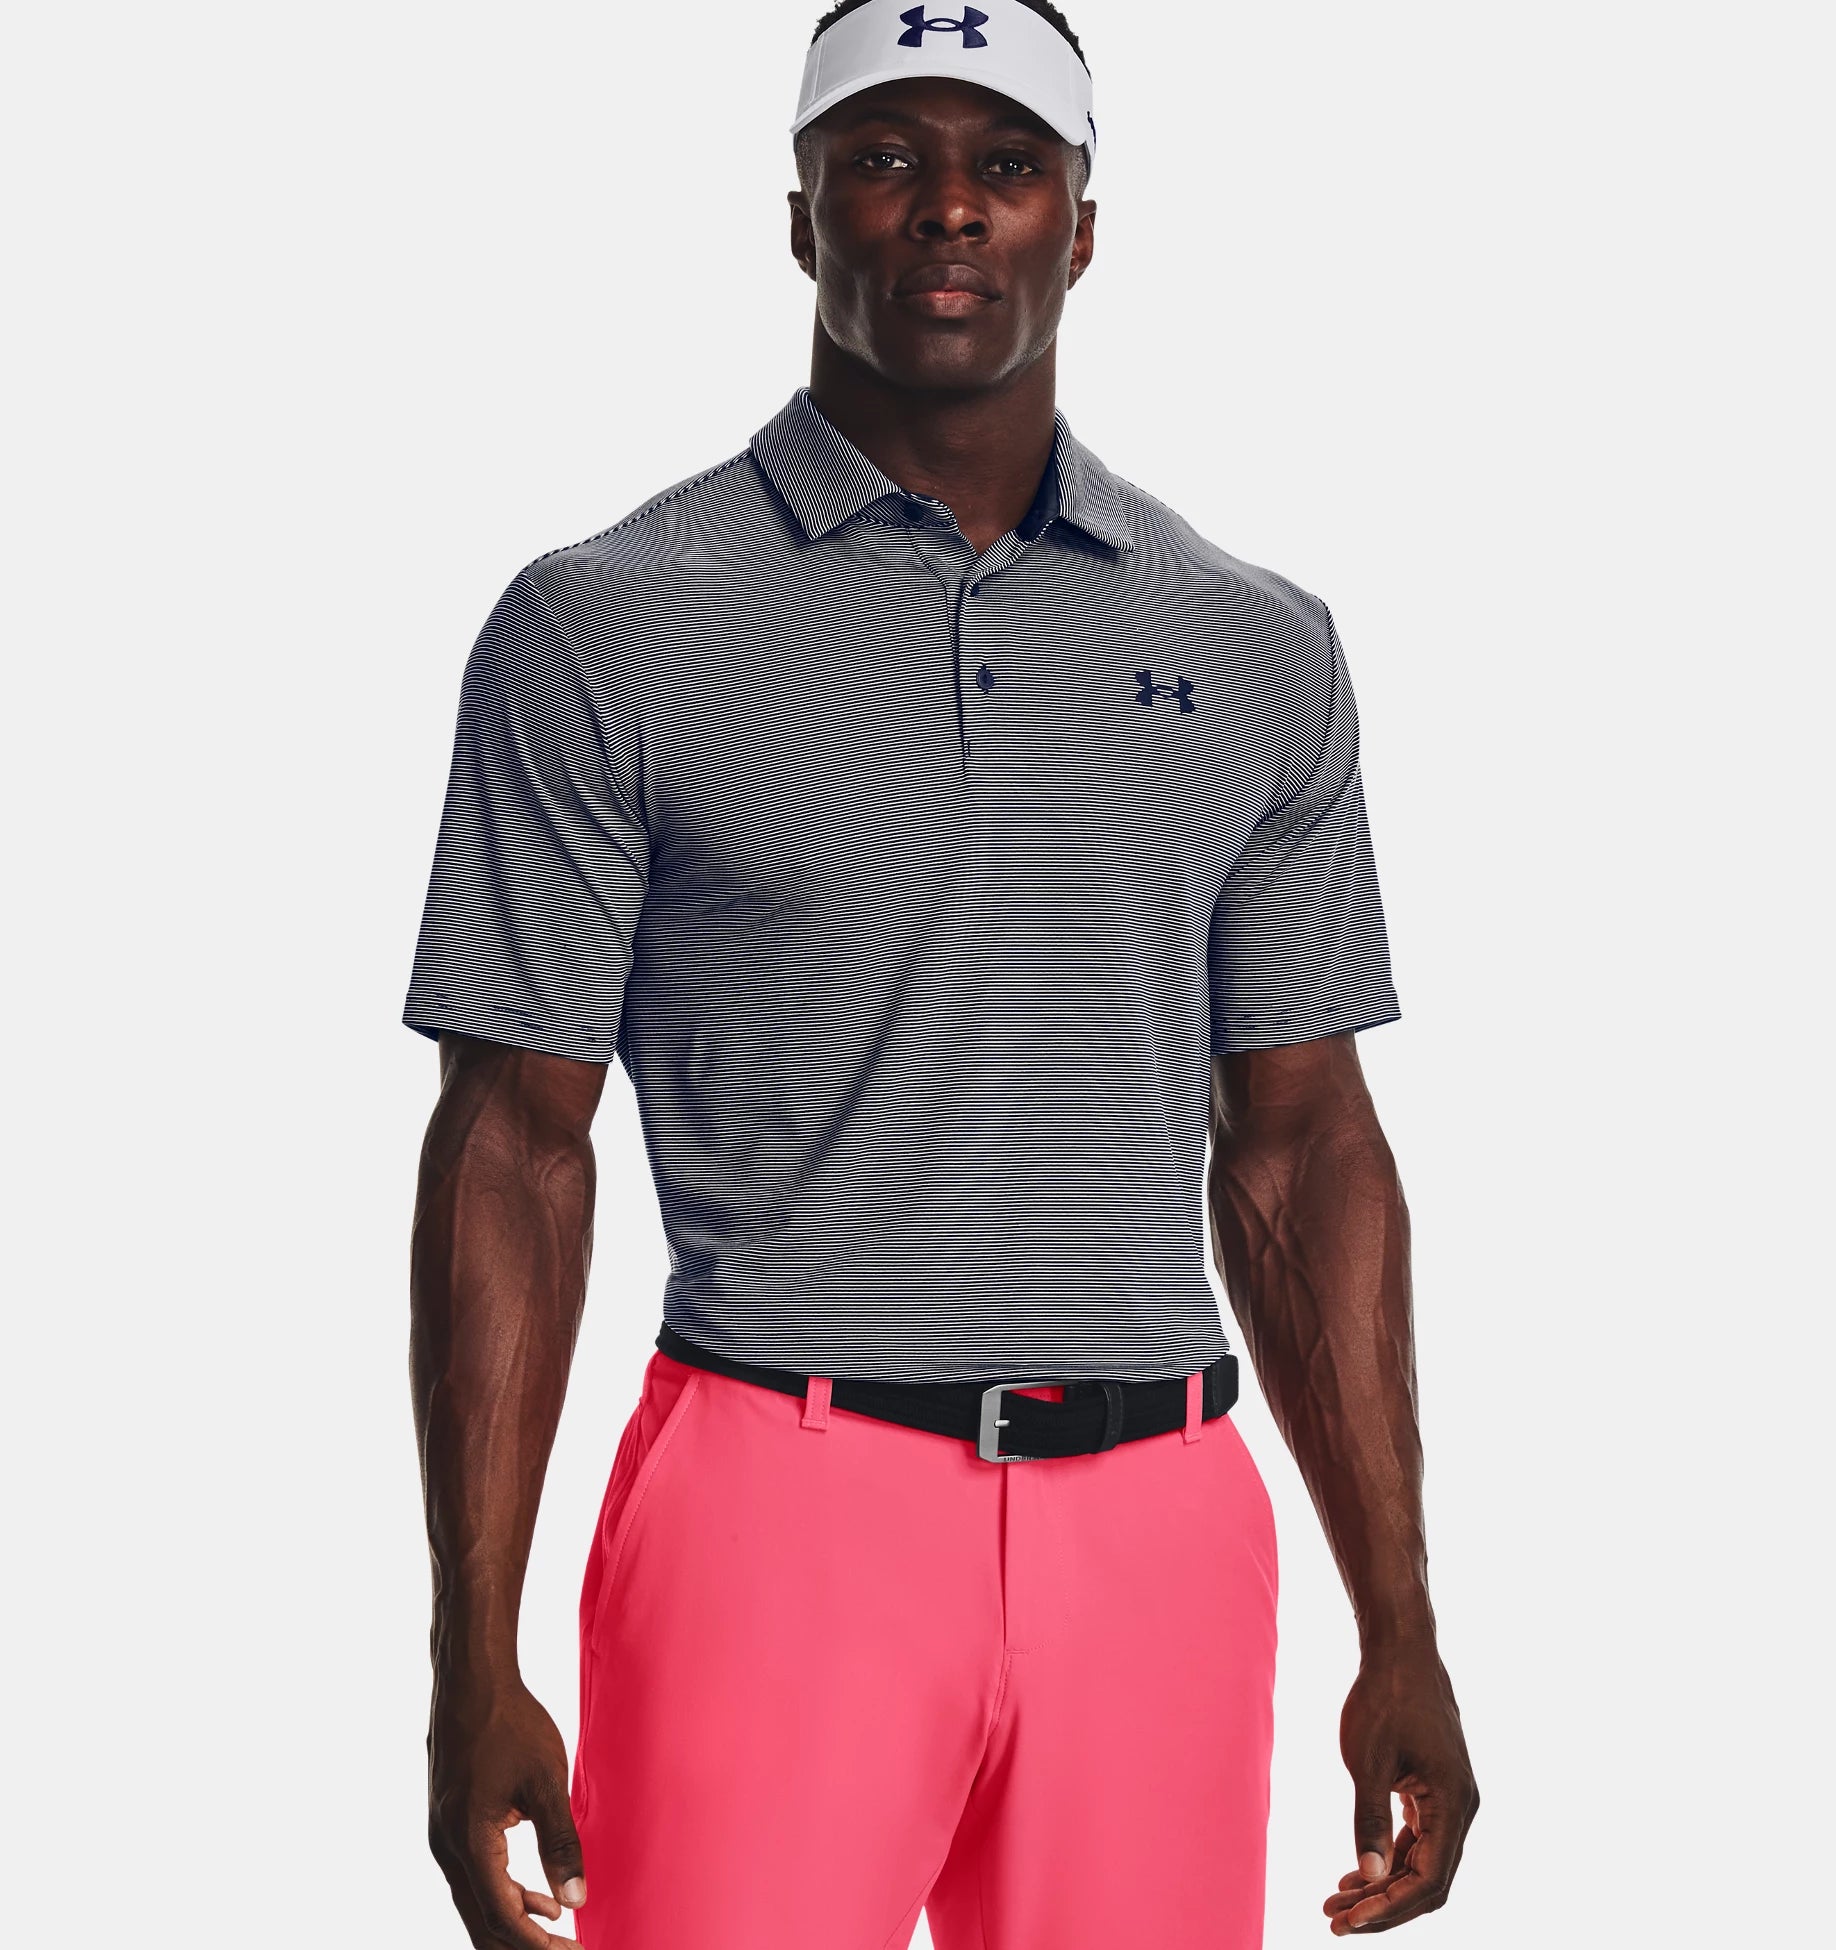 HA-EMORE Men's Stripe Golf Shirt Short Sleeve Slim Fit Basic Designed  Collared Shirt Tshirts 